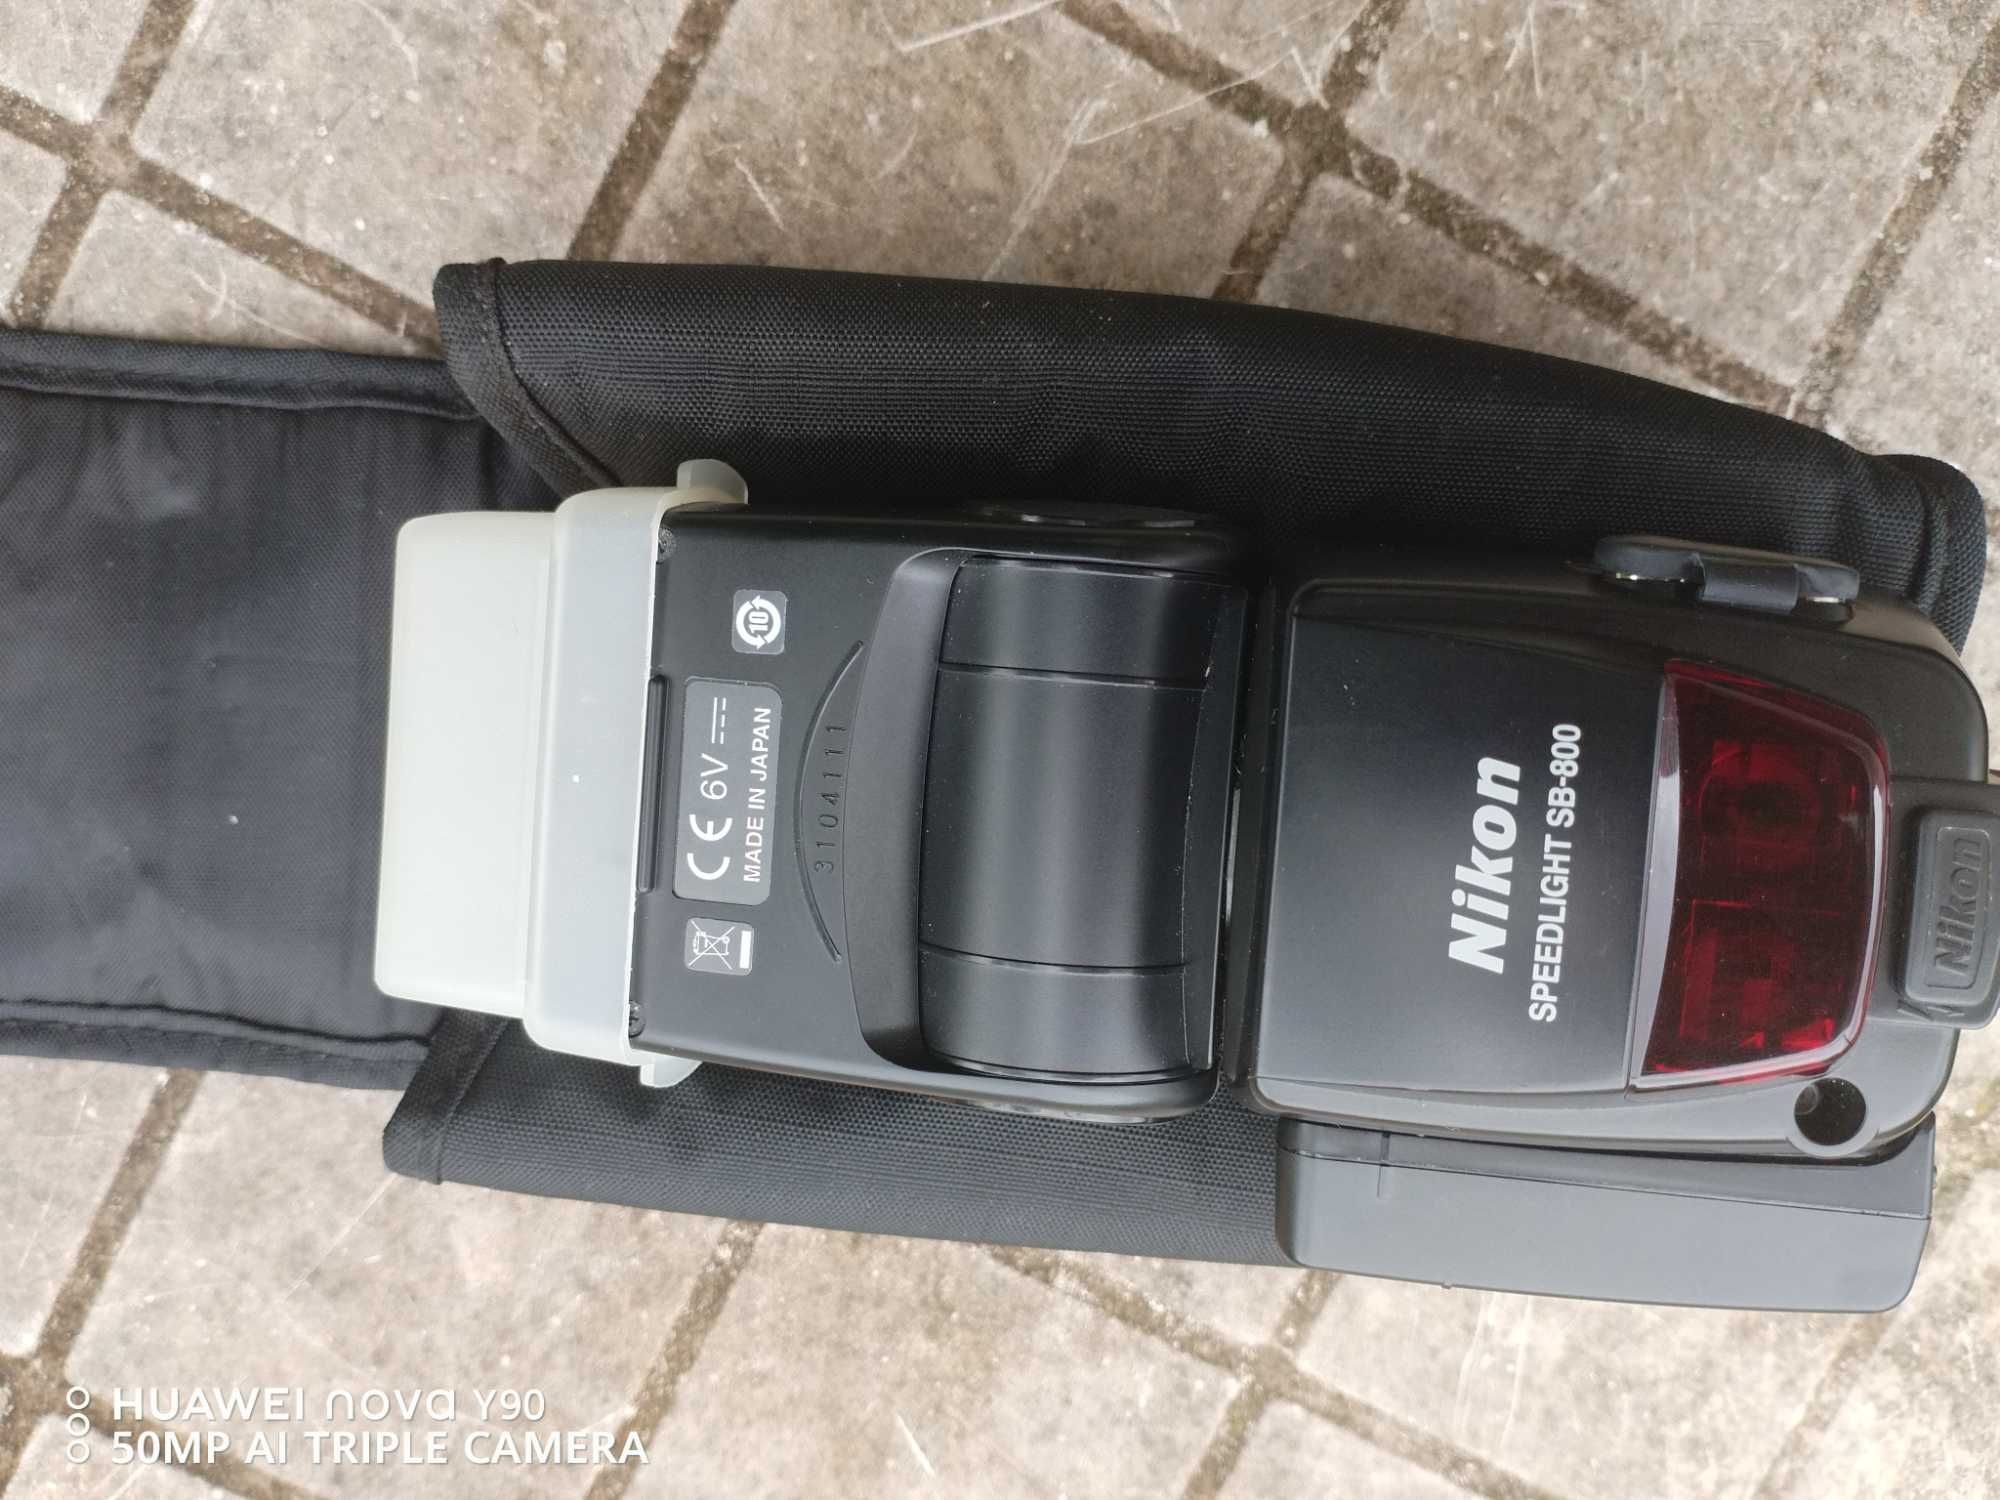 Blit Nikon Speedlight sb-800